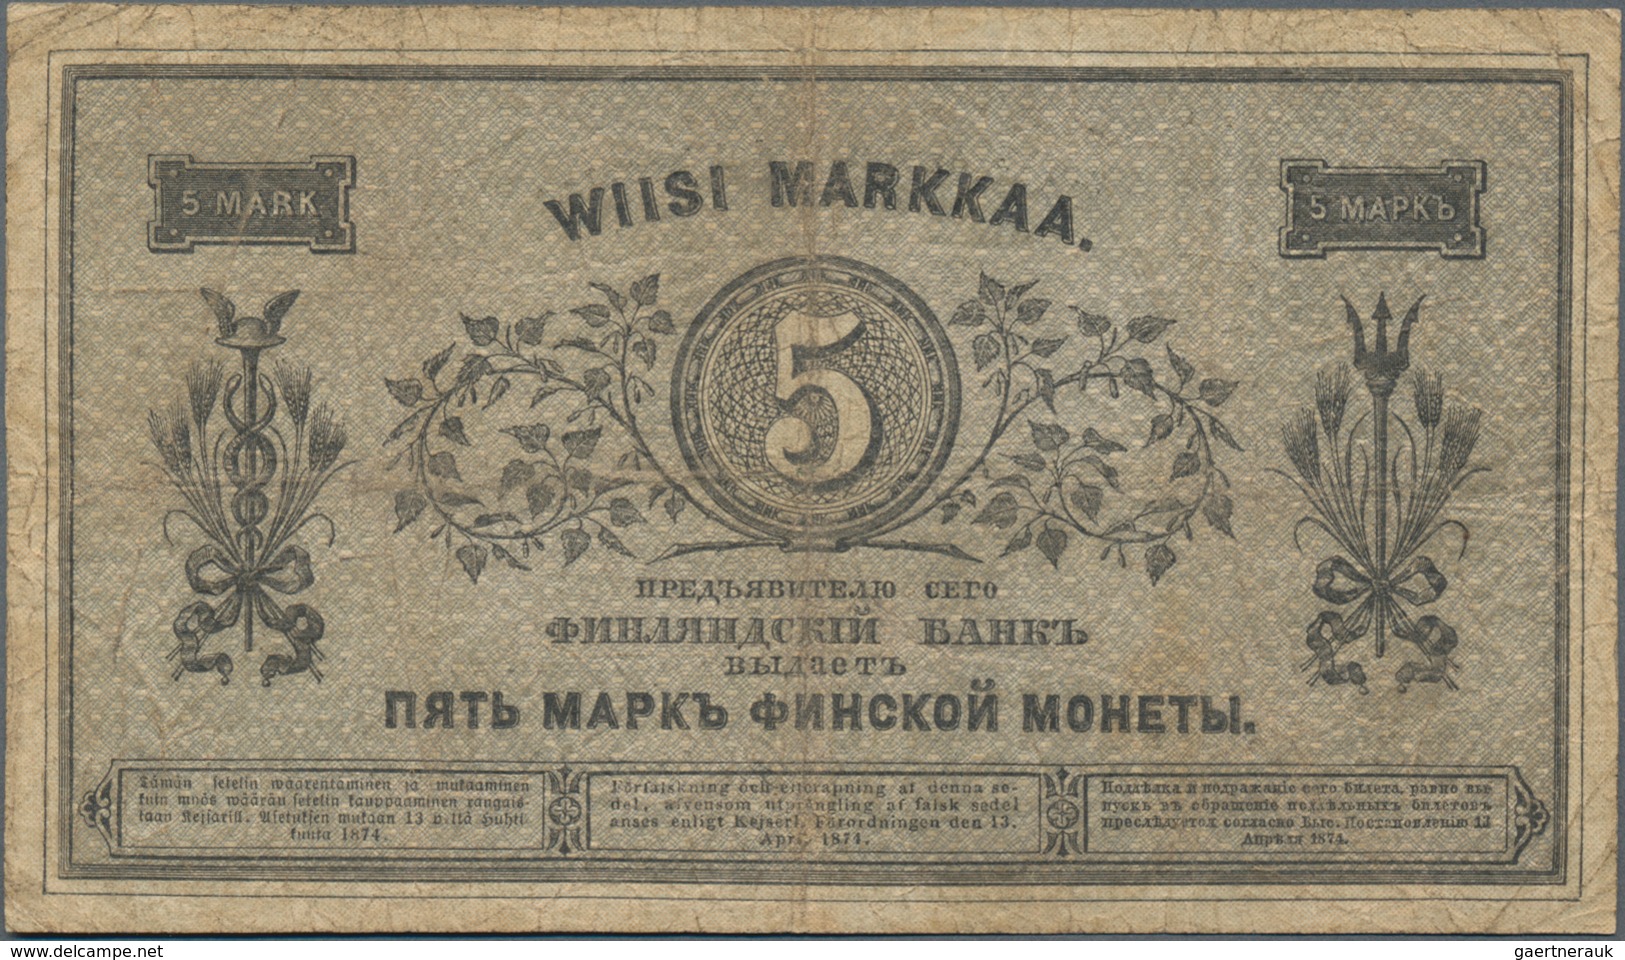 Finland / Finnland: Finlands Bank 5 Markkaa 1878 With Printed Signatures, P.A43b, Still Nice Conditi - Finland